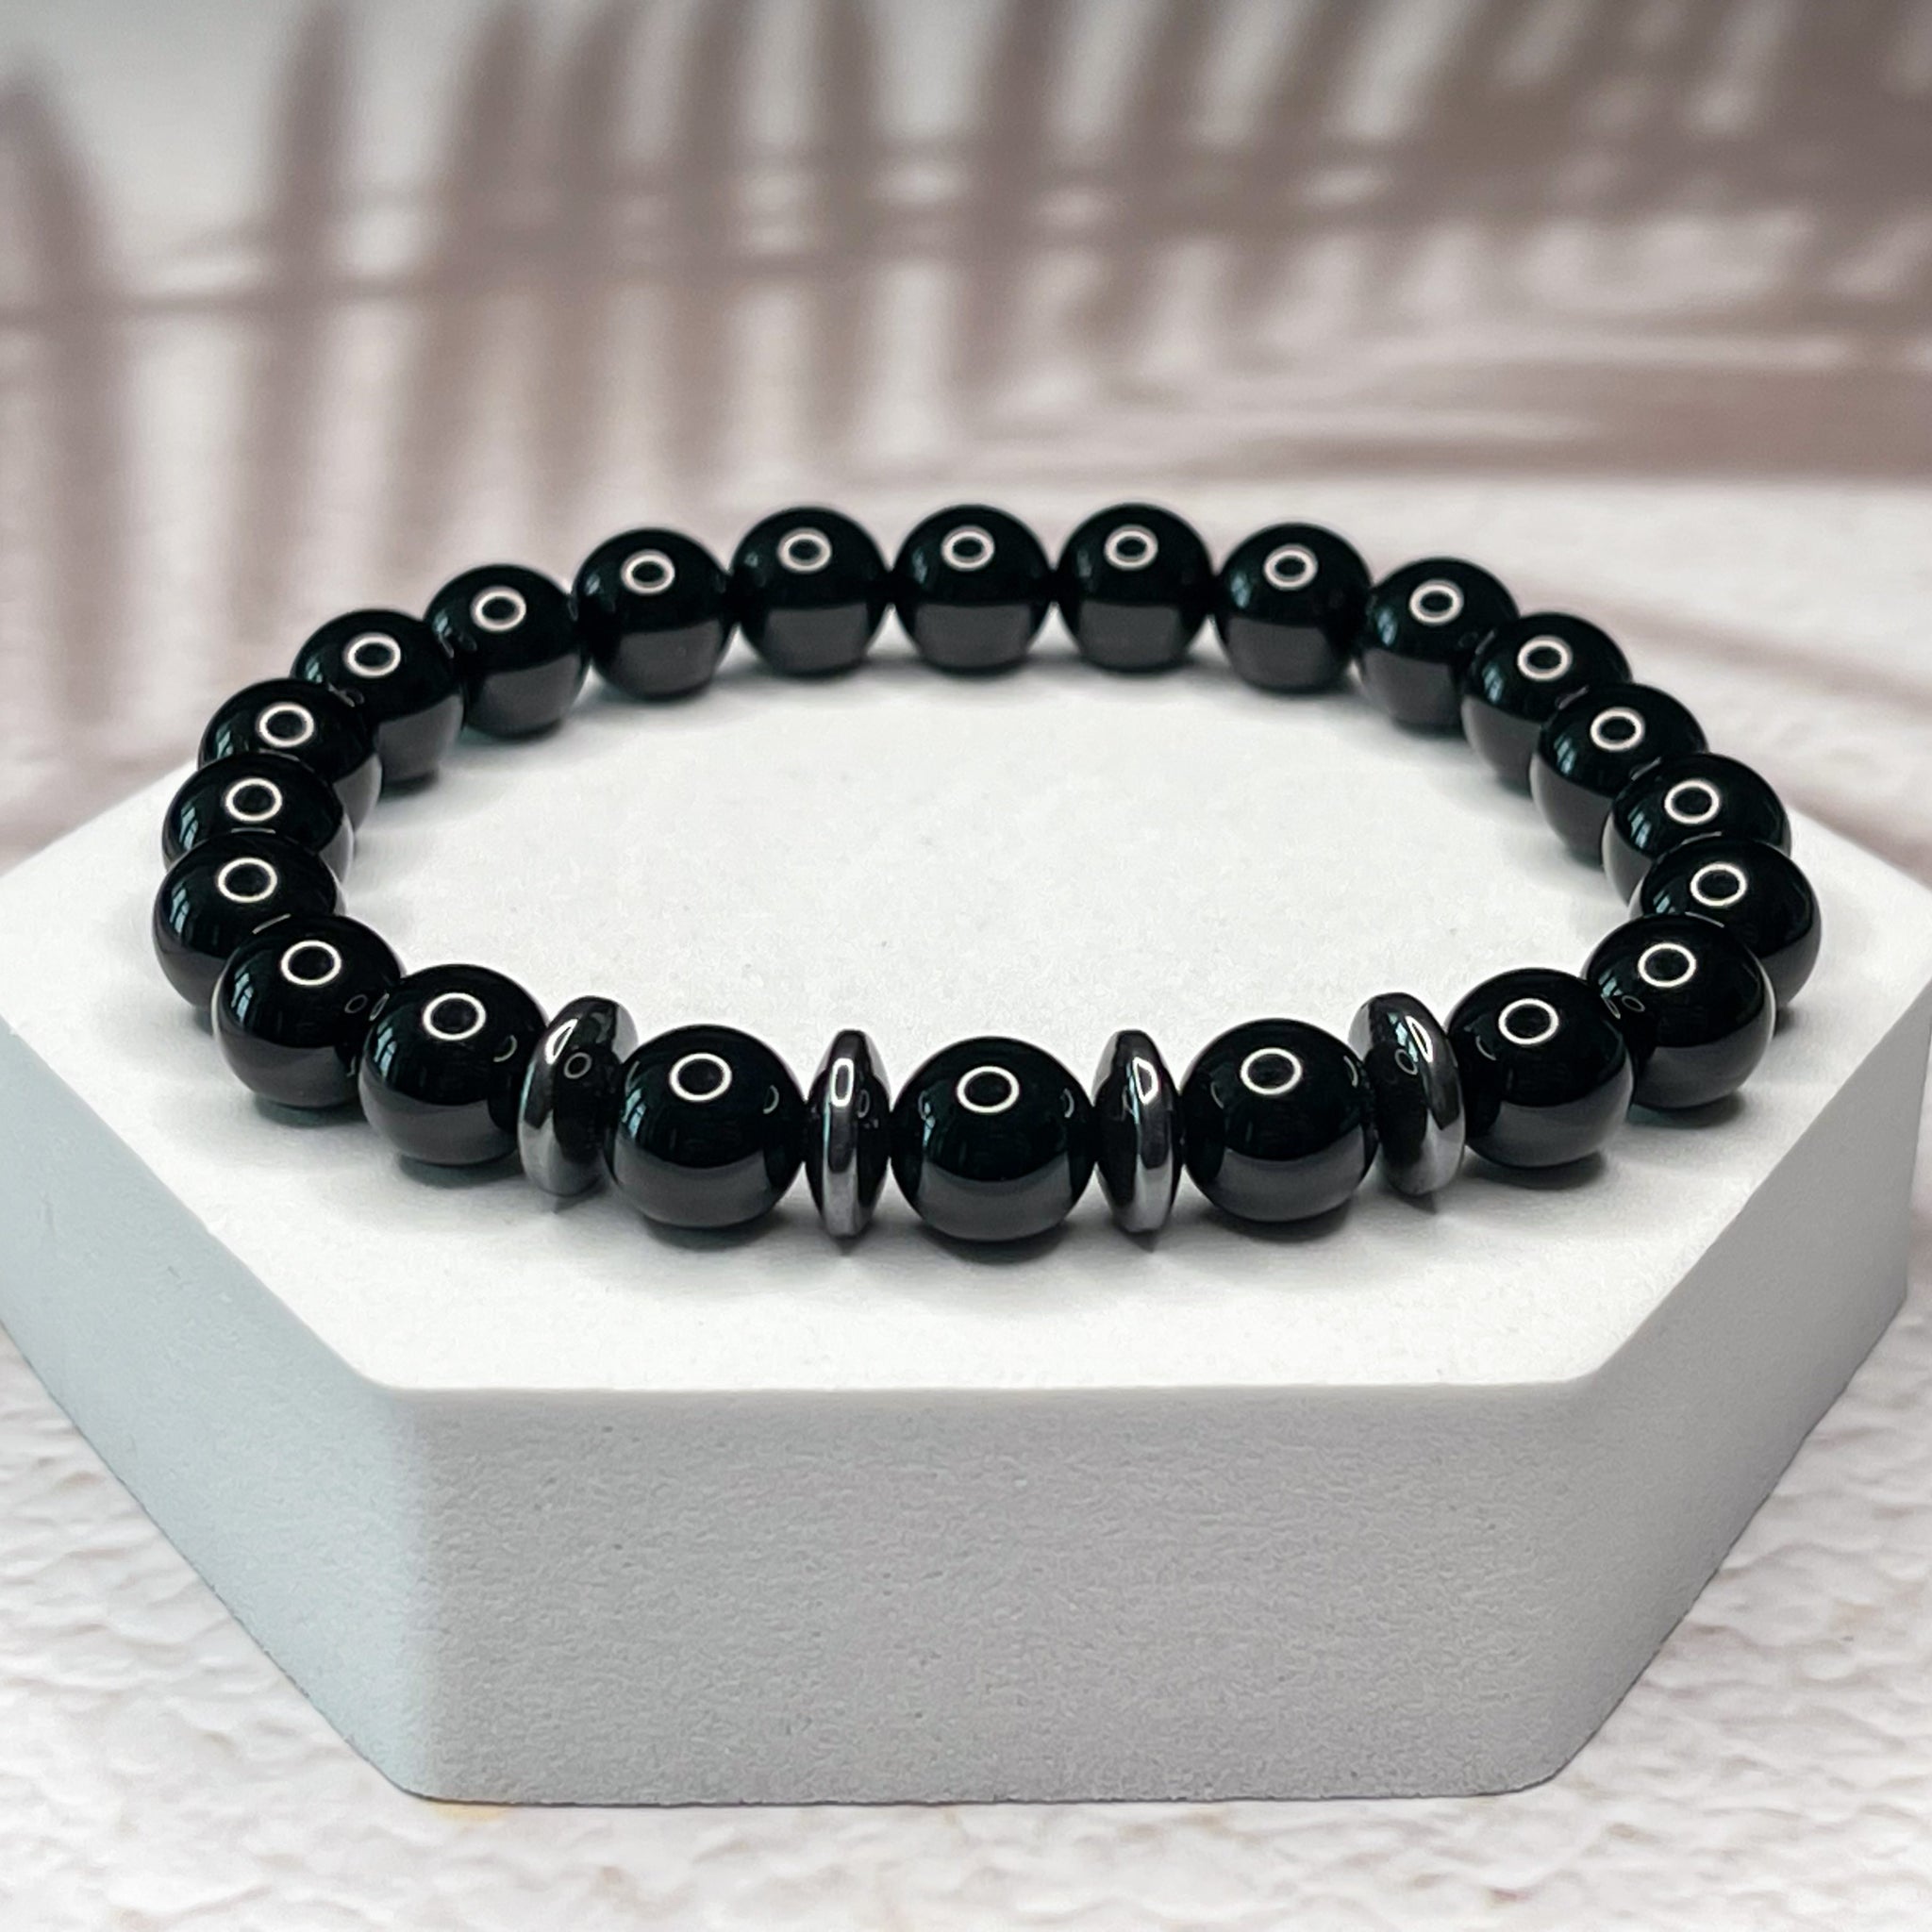 Bracelets - Gemstone - Hematite 8mm Bead bracelet fits up to 7.5 in